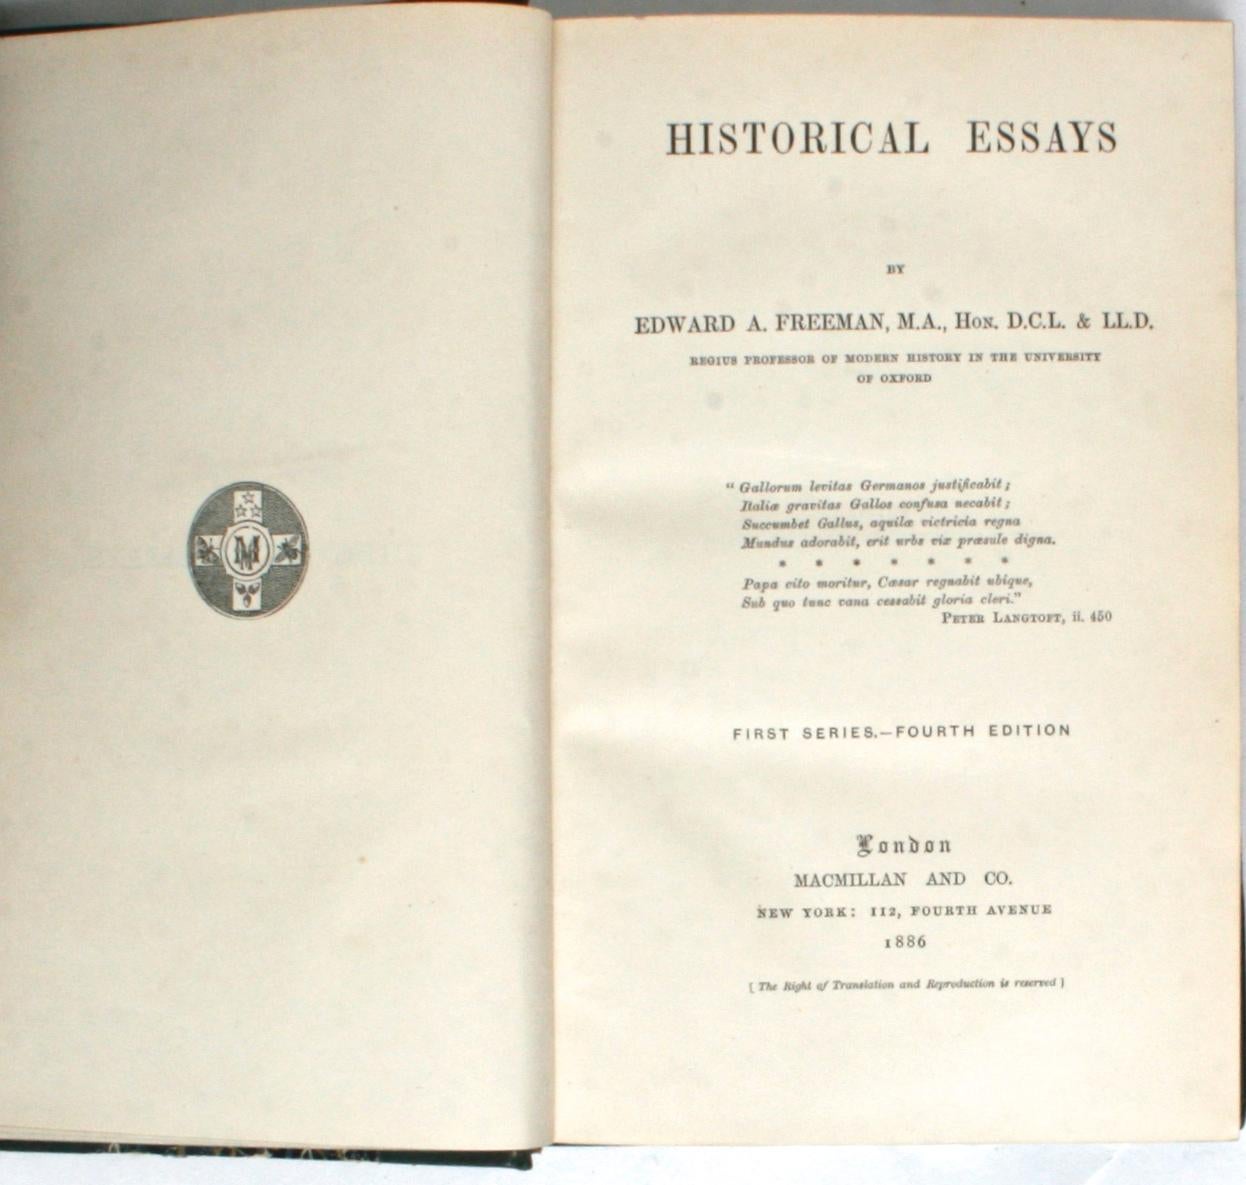 English Historical Essays by Edward A. Freeman in Three Volumes